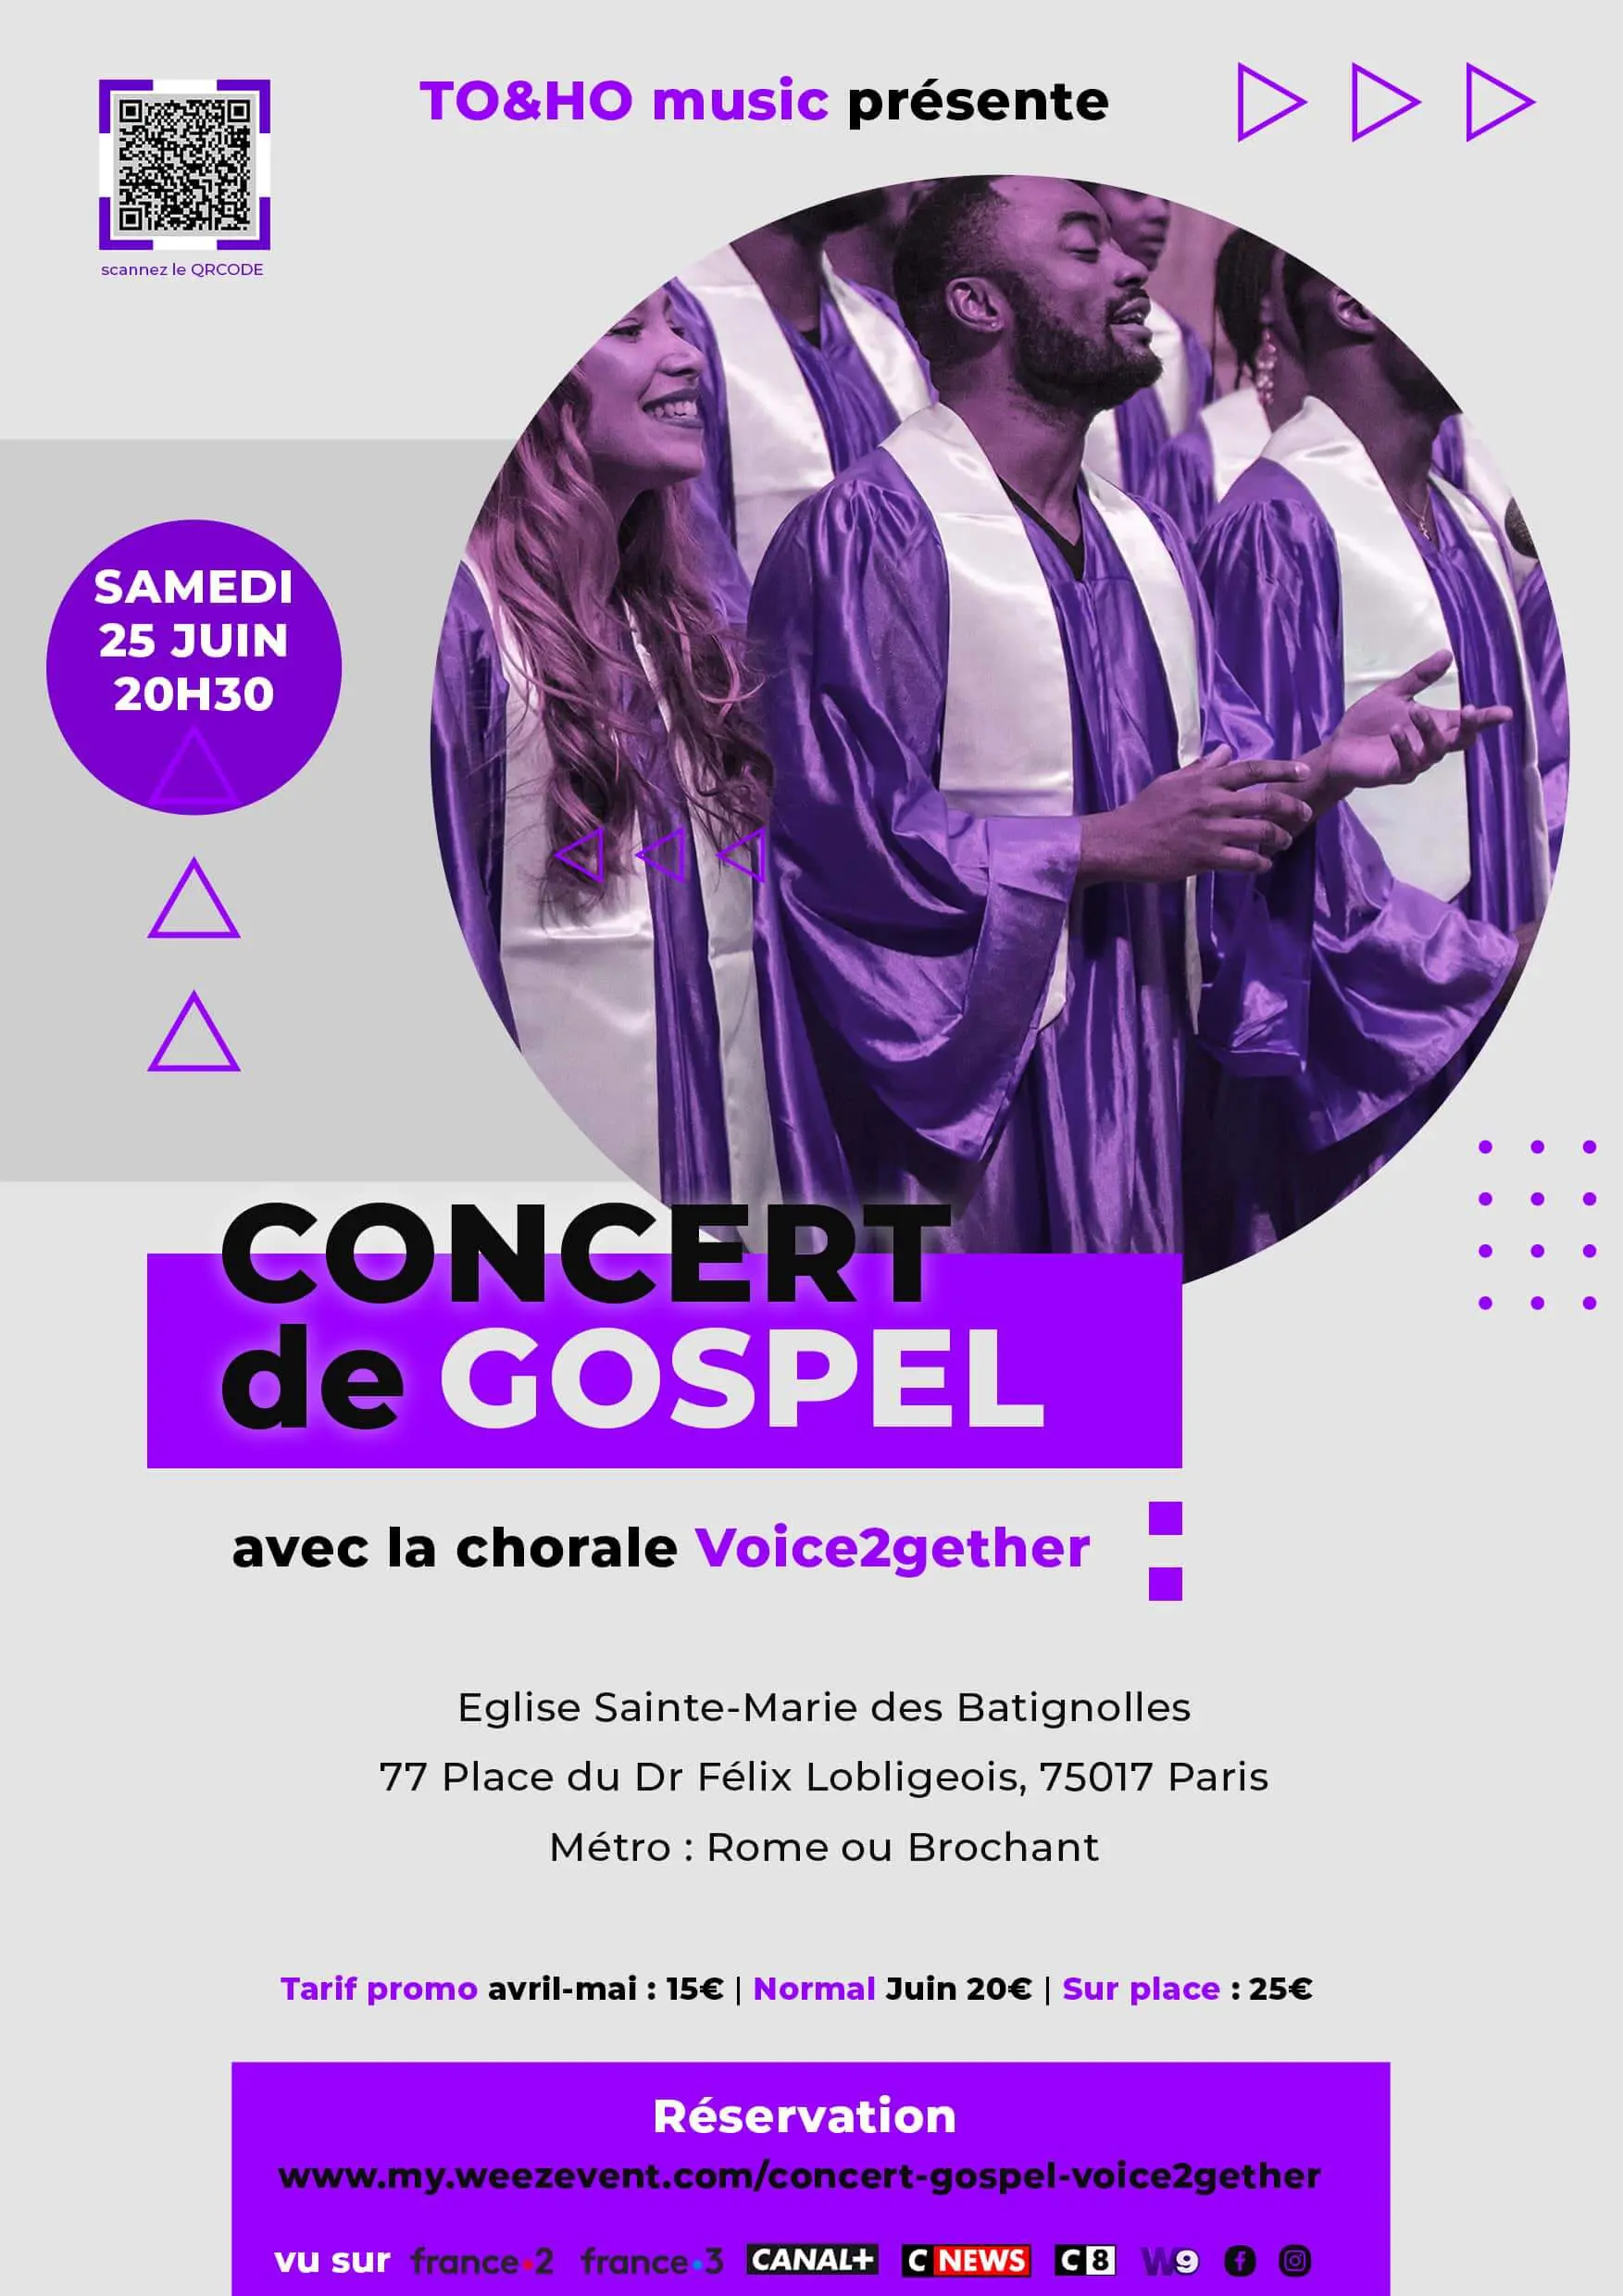 concert gospel Paris Voice2gether